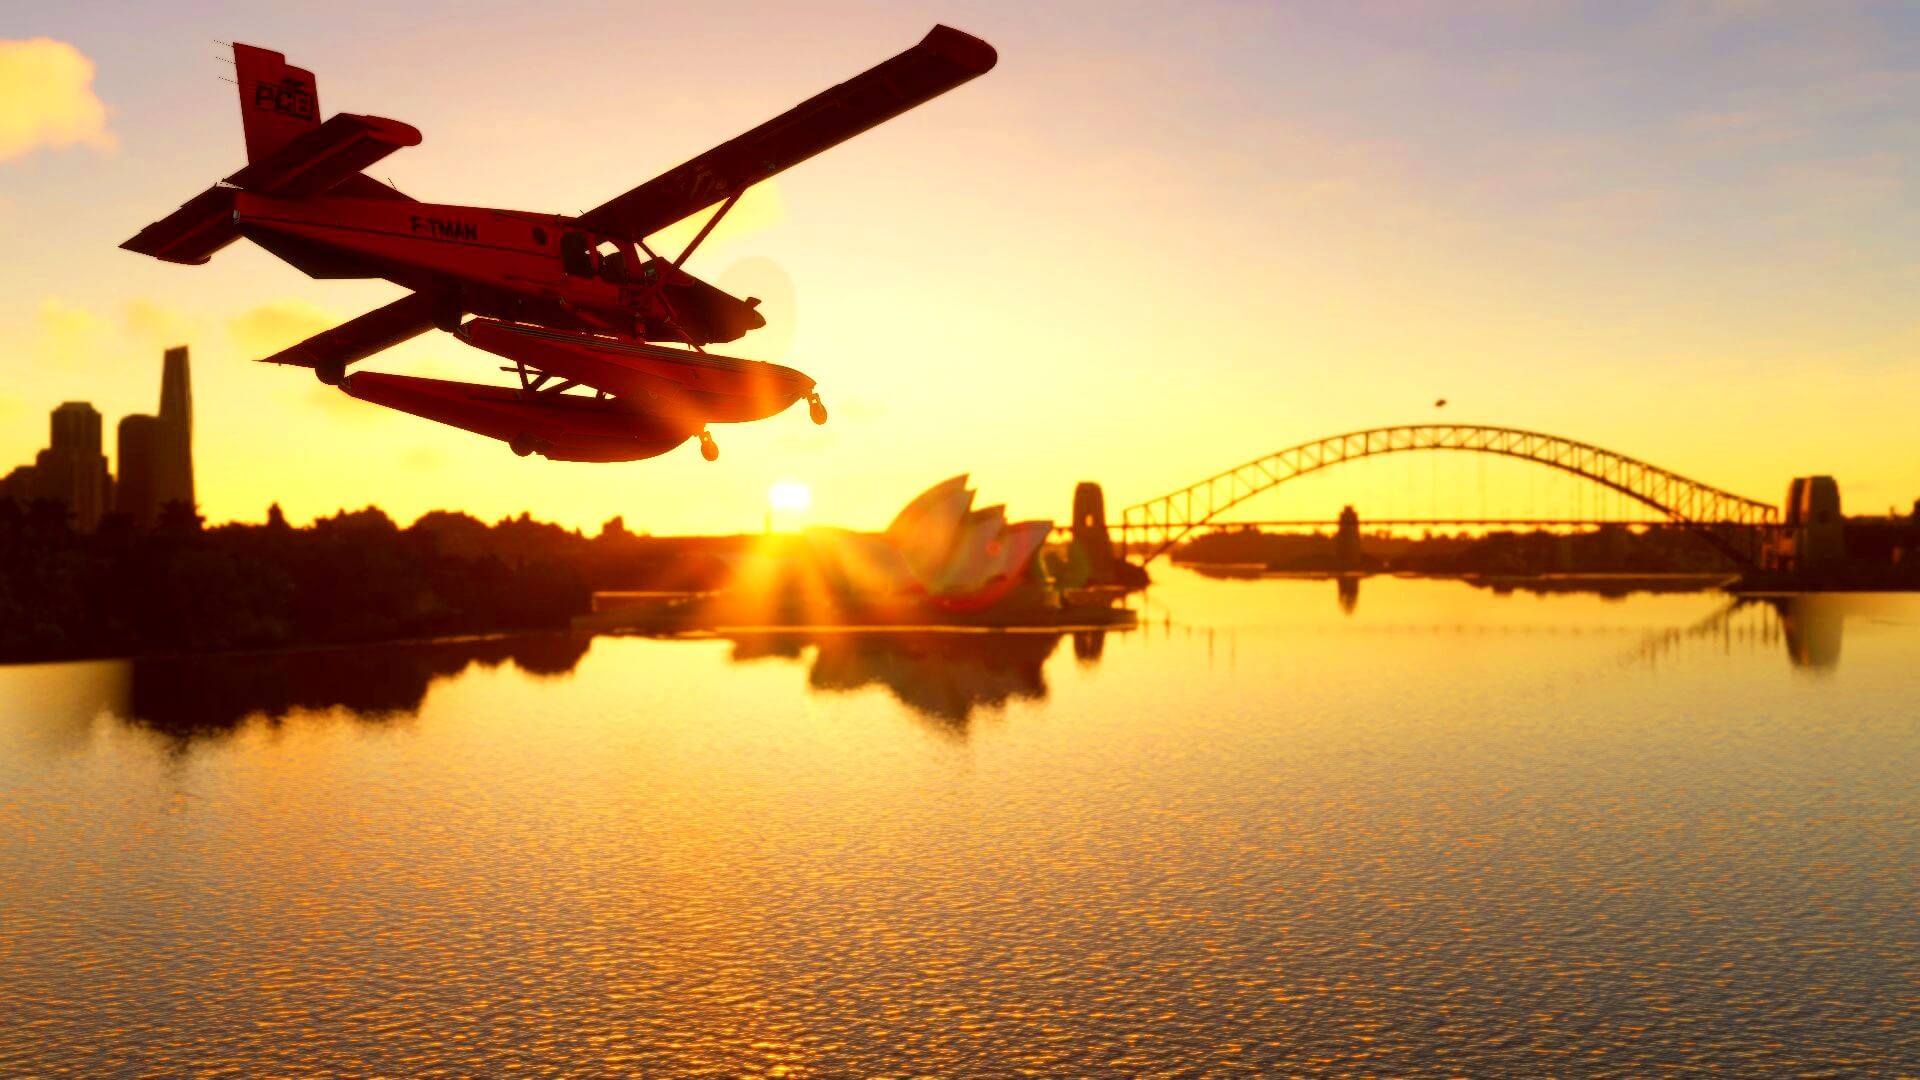 Flying near a bridge during sunset